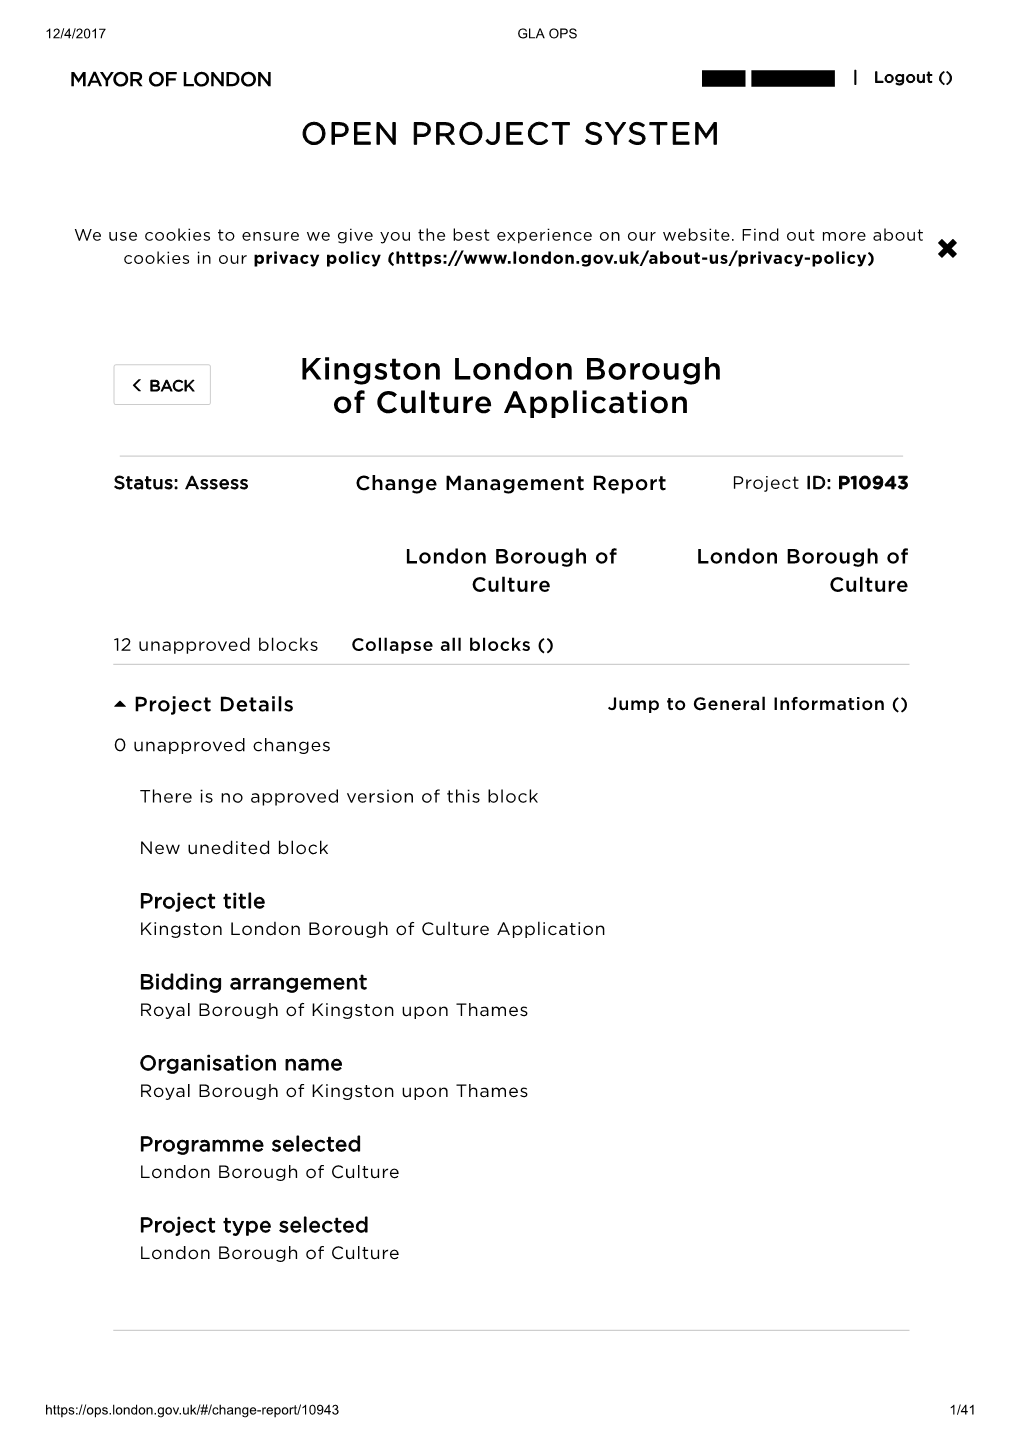 Kingston London Borough of Culture Application OPEN PROJECT